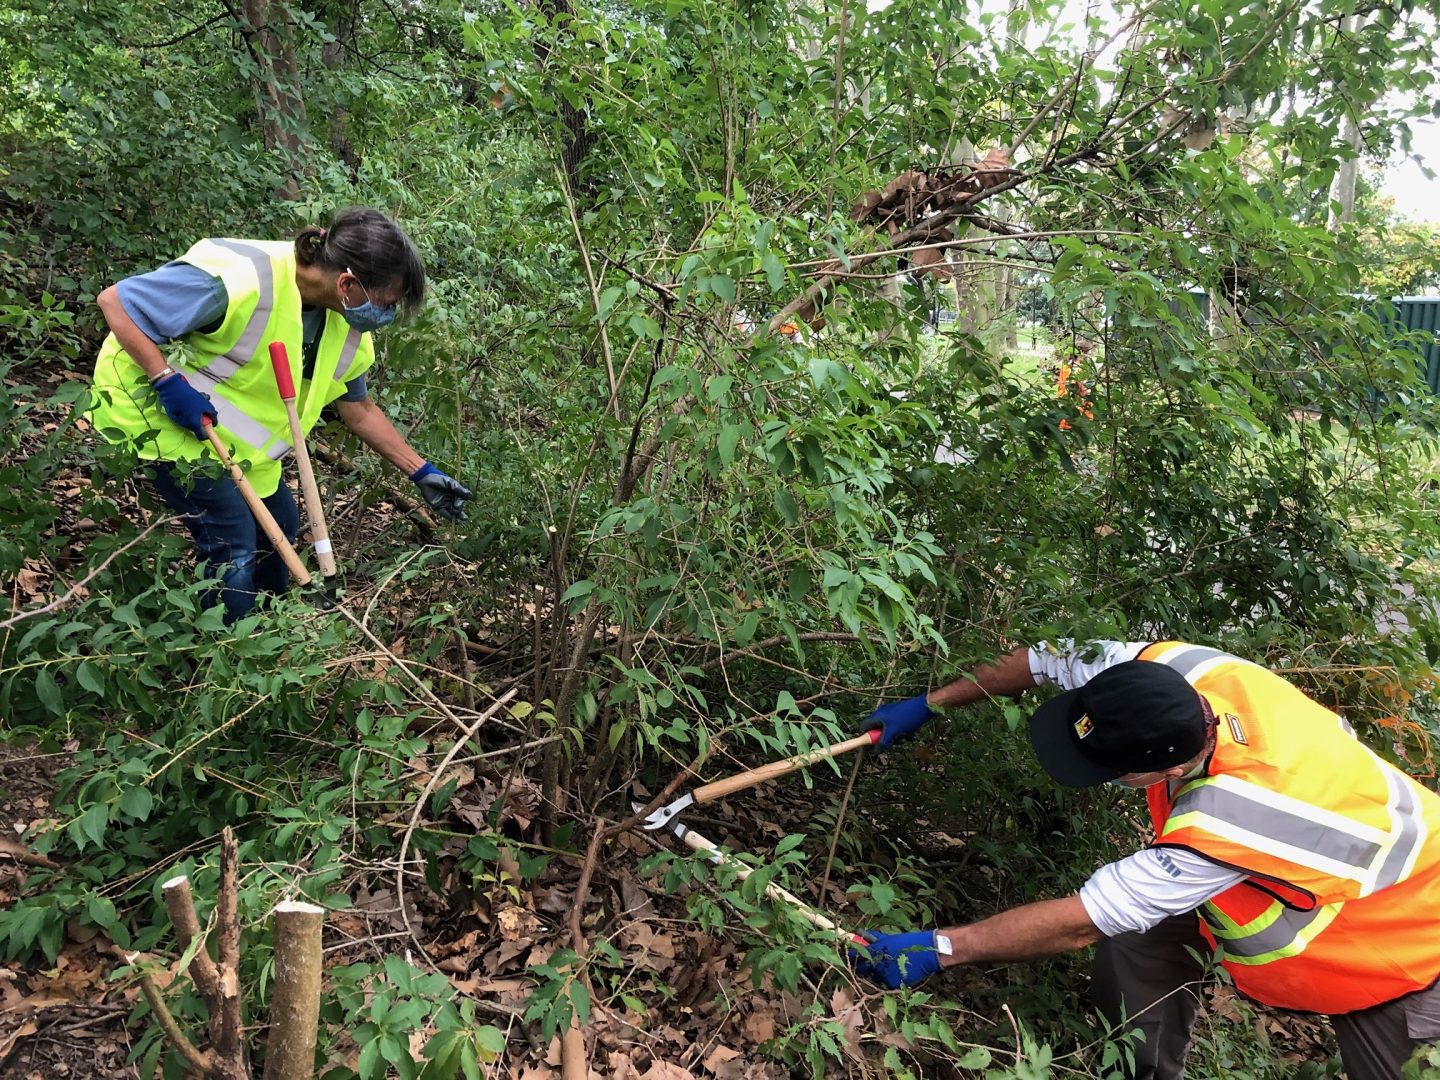 Two volunteers cut away at invasive species